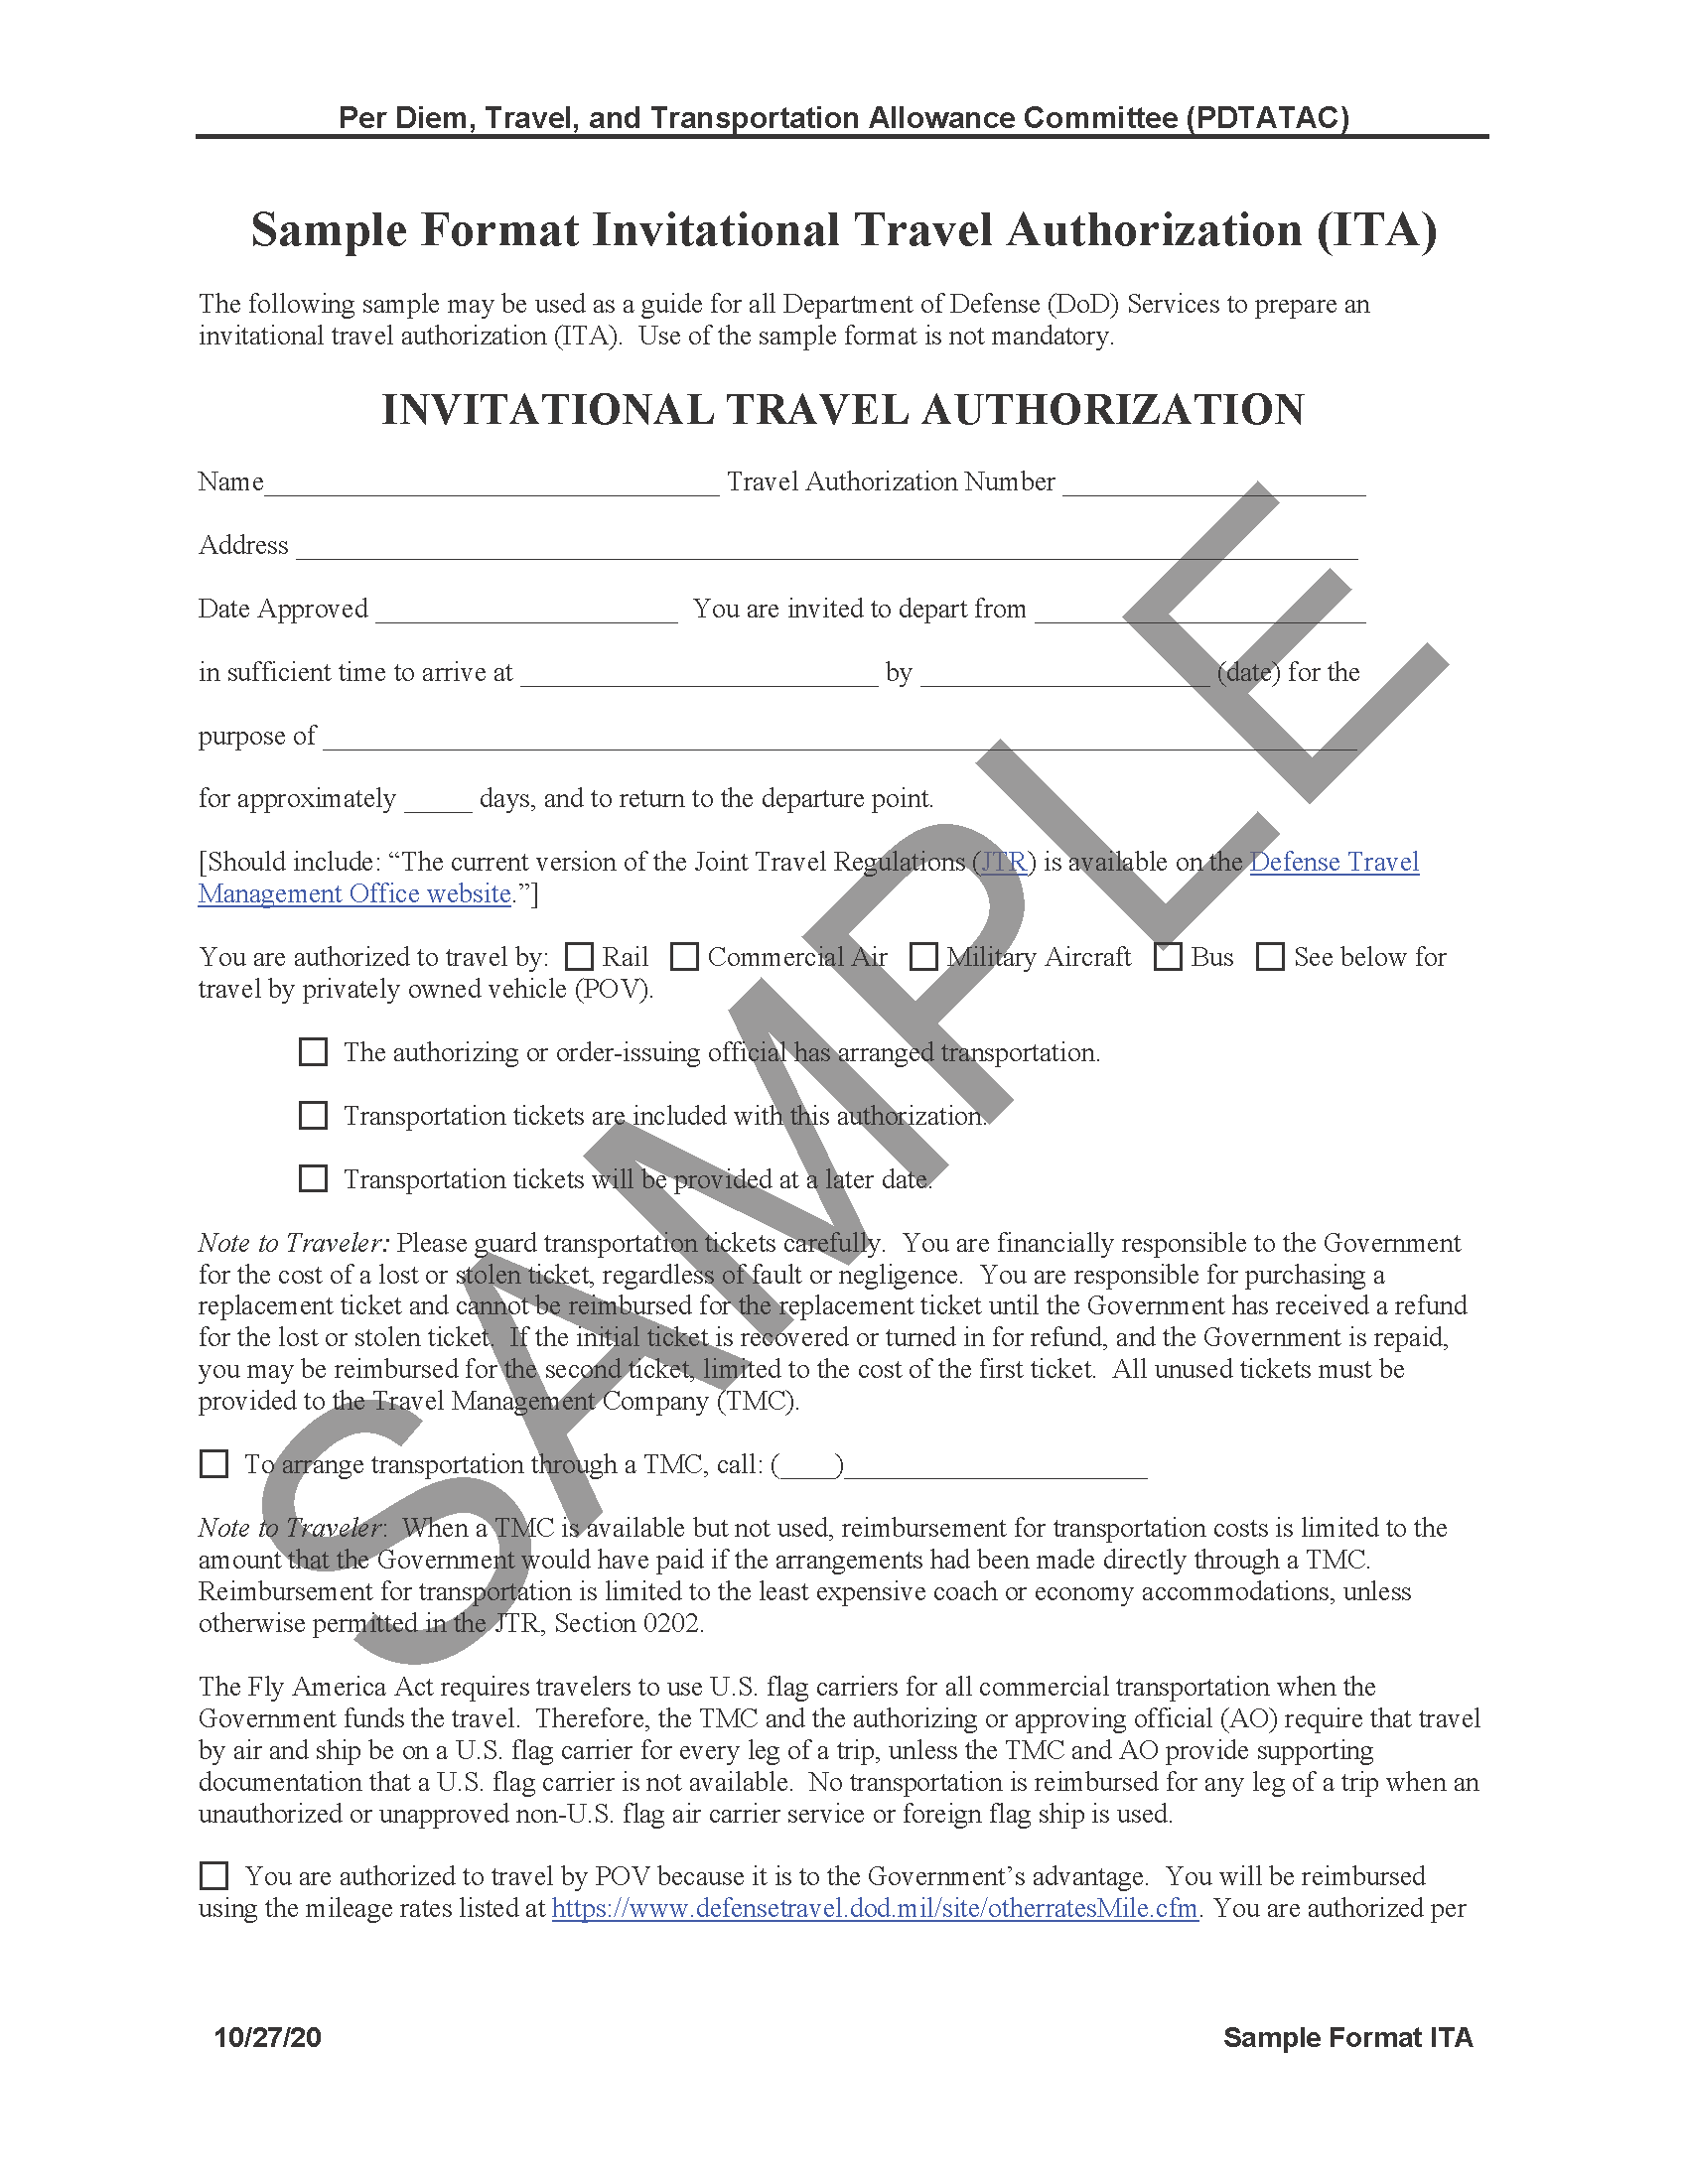 Sample Invitational Travel Authorization form